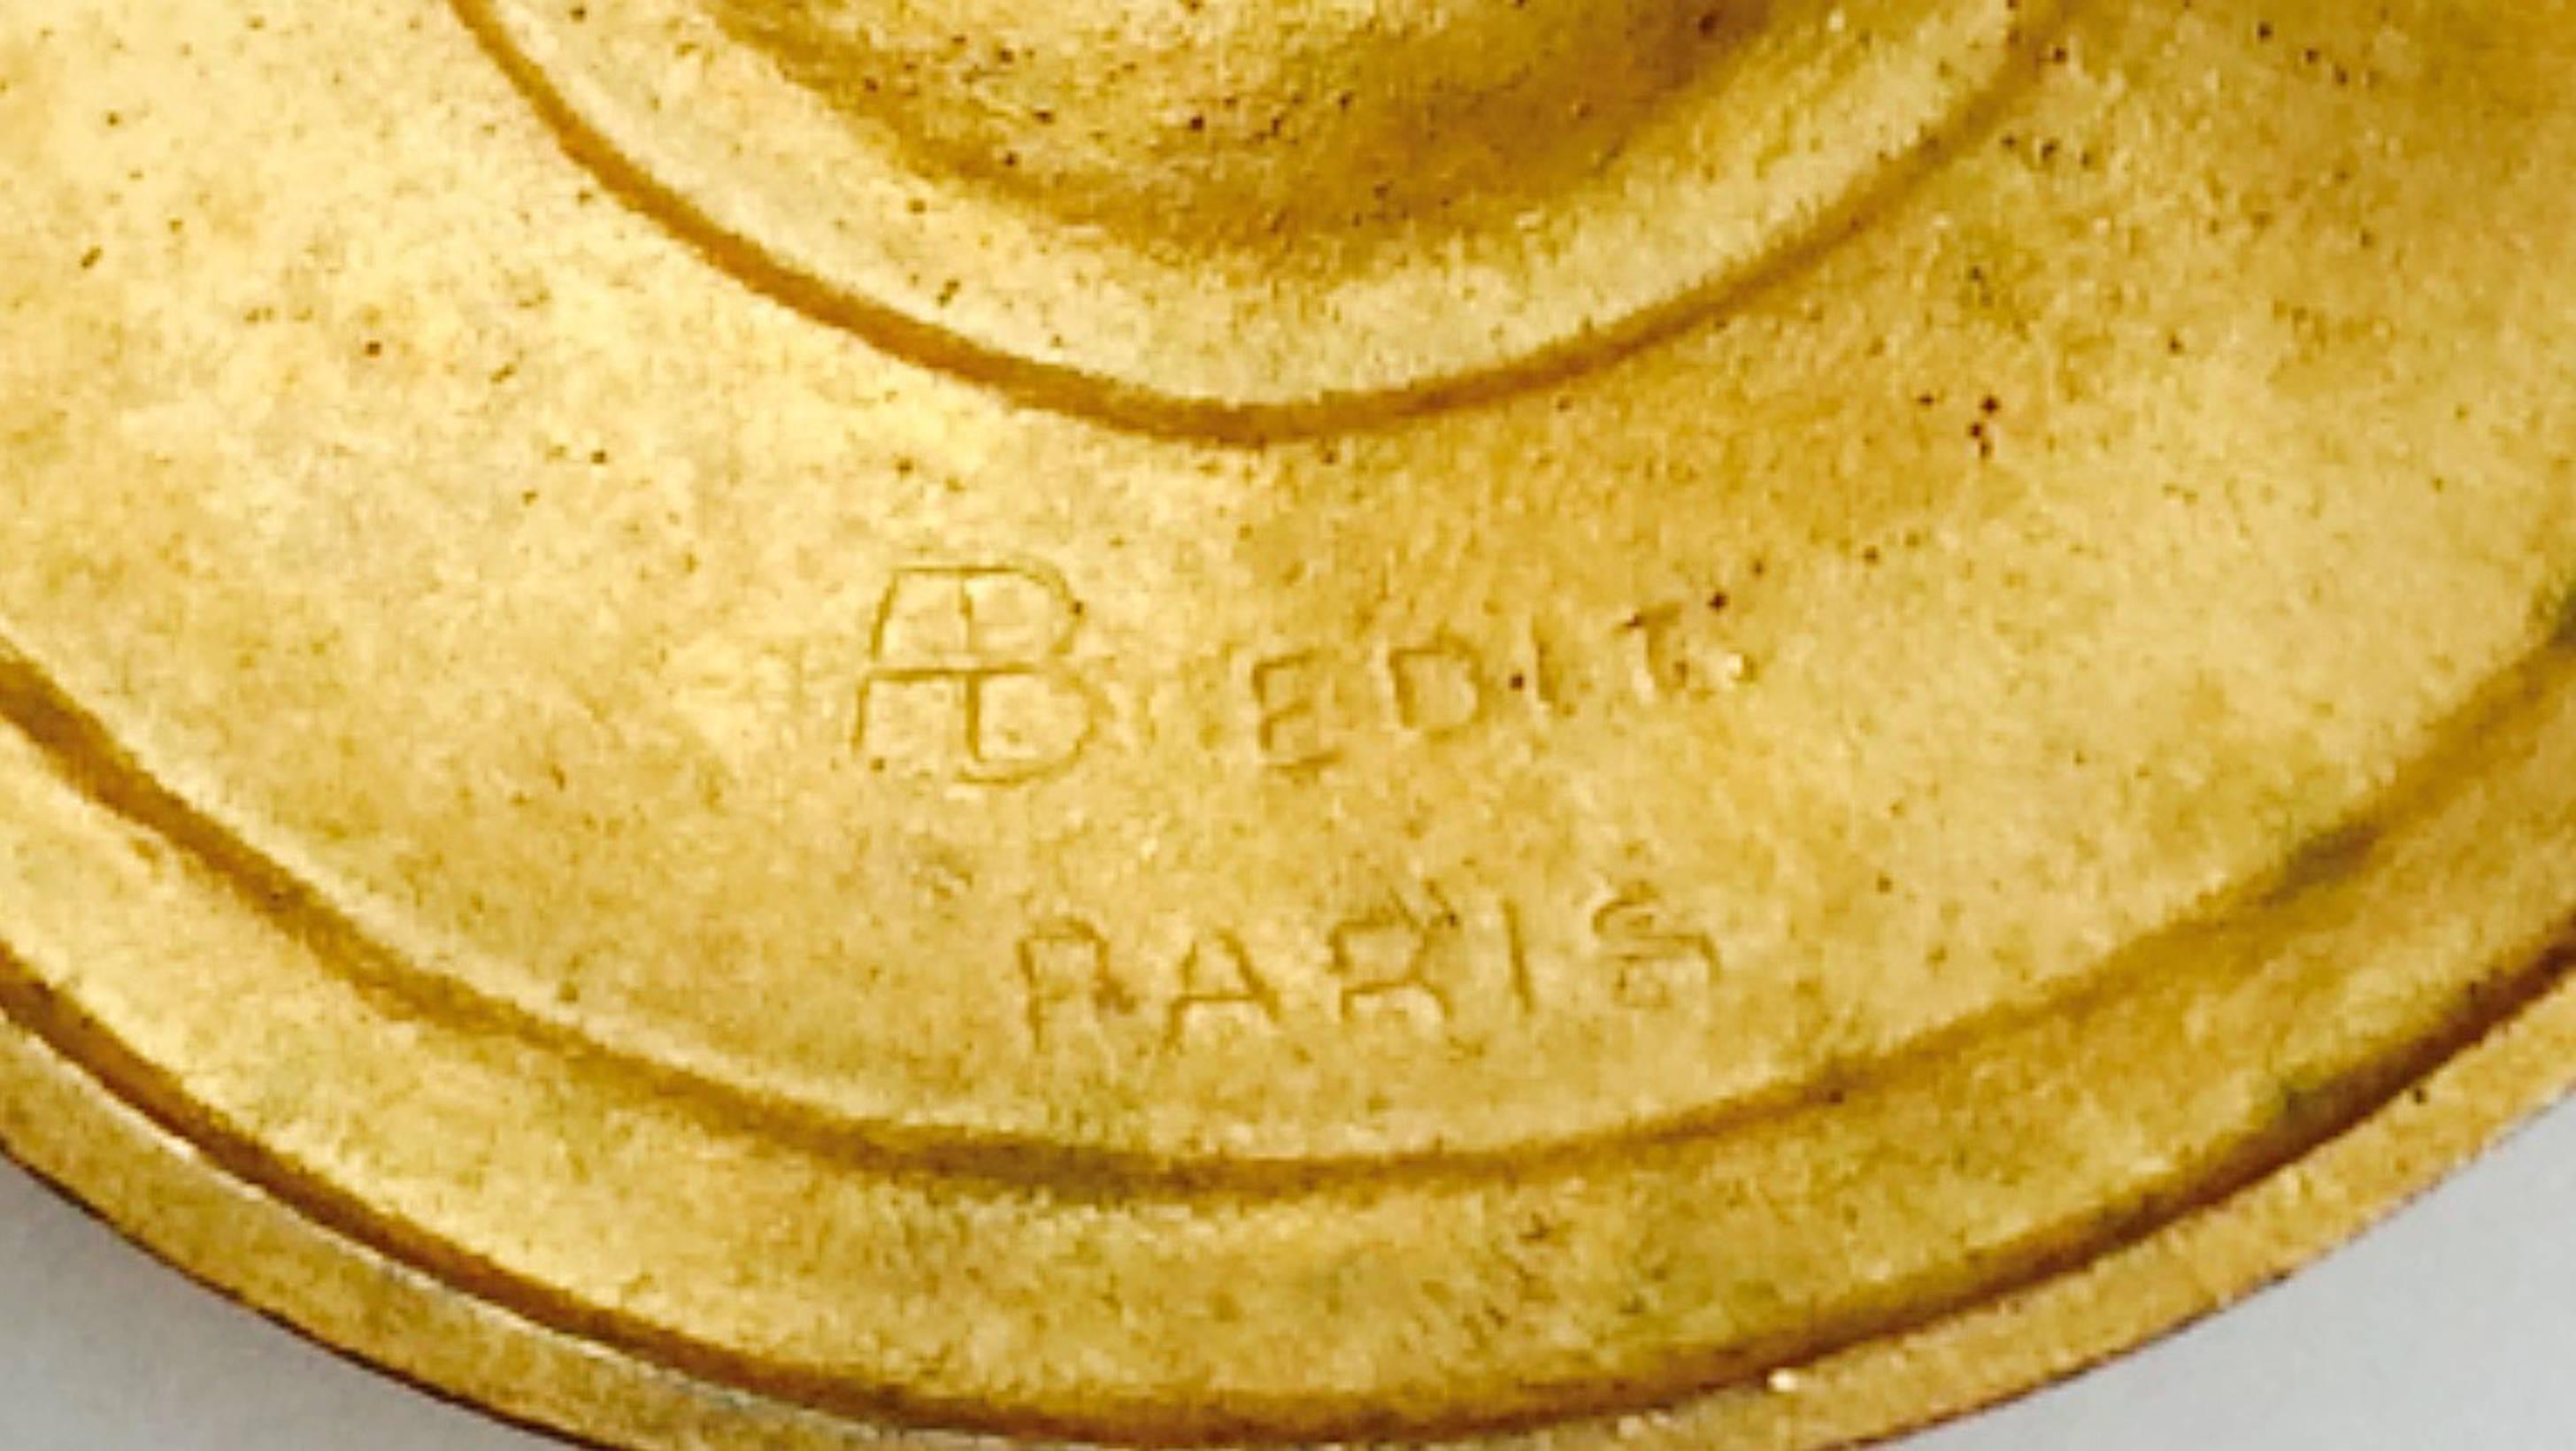 Byzantine Arthus Bertrand Paris Gilt Enamel Brooch, 1950s For Sale